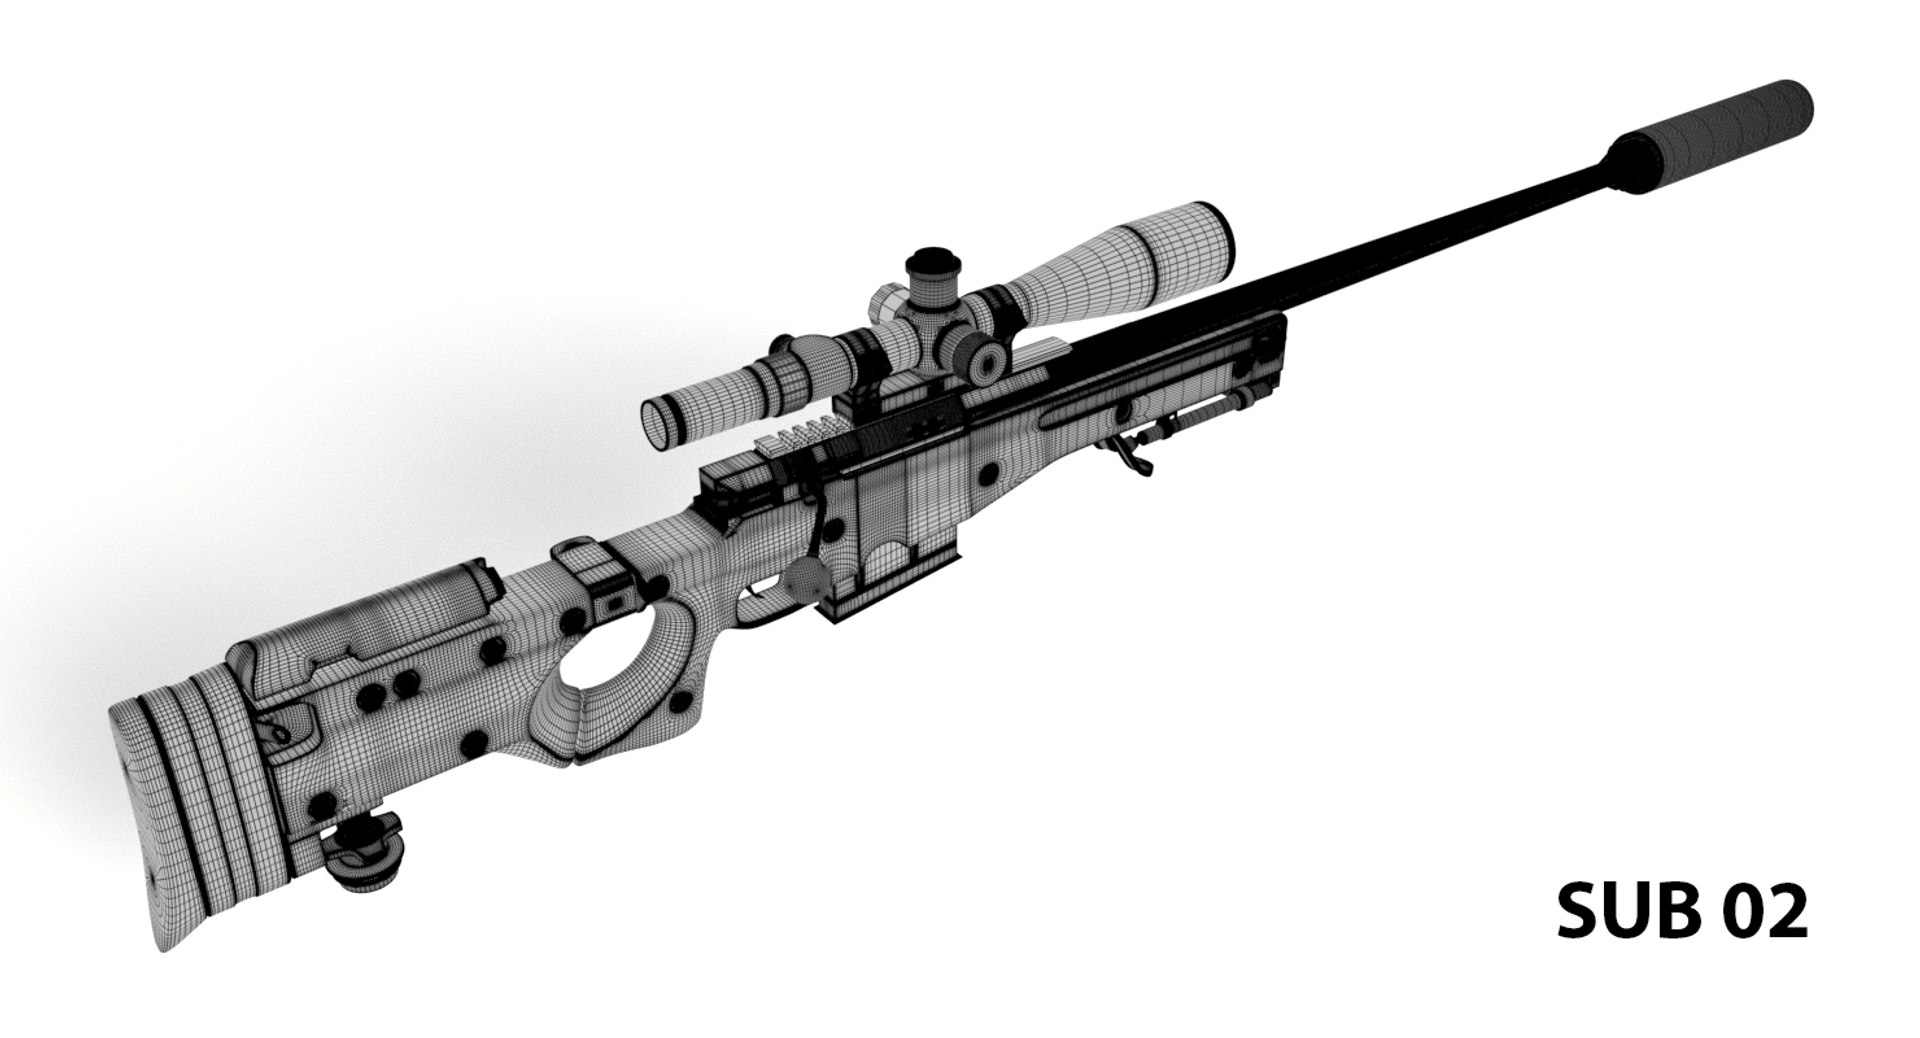 SNIPER L115A3 Weapon Arma Rifle - - 3D Warehouse